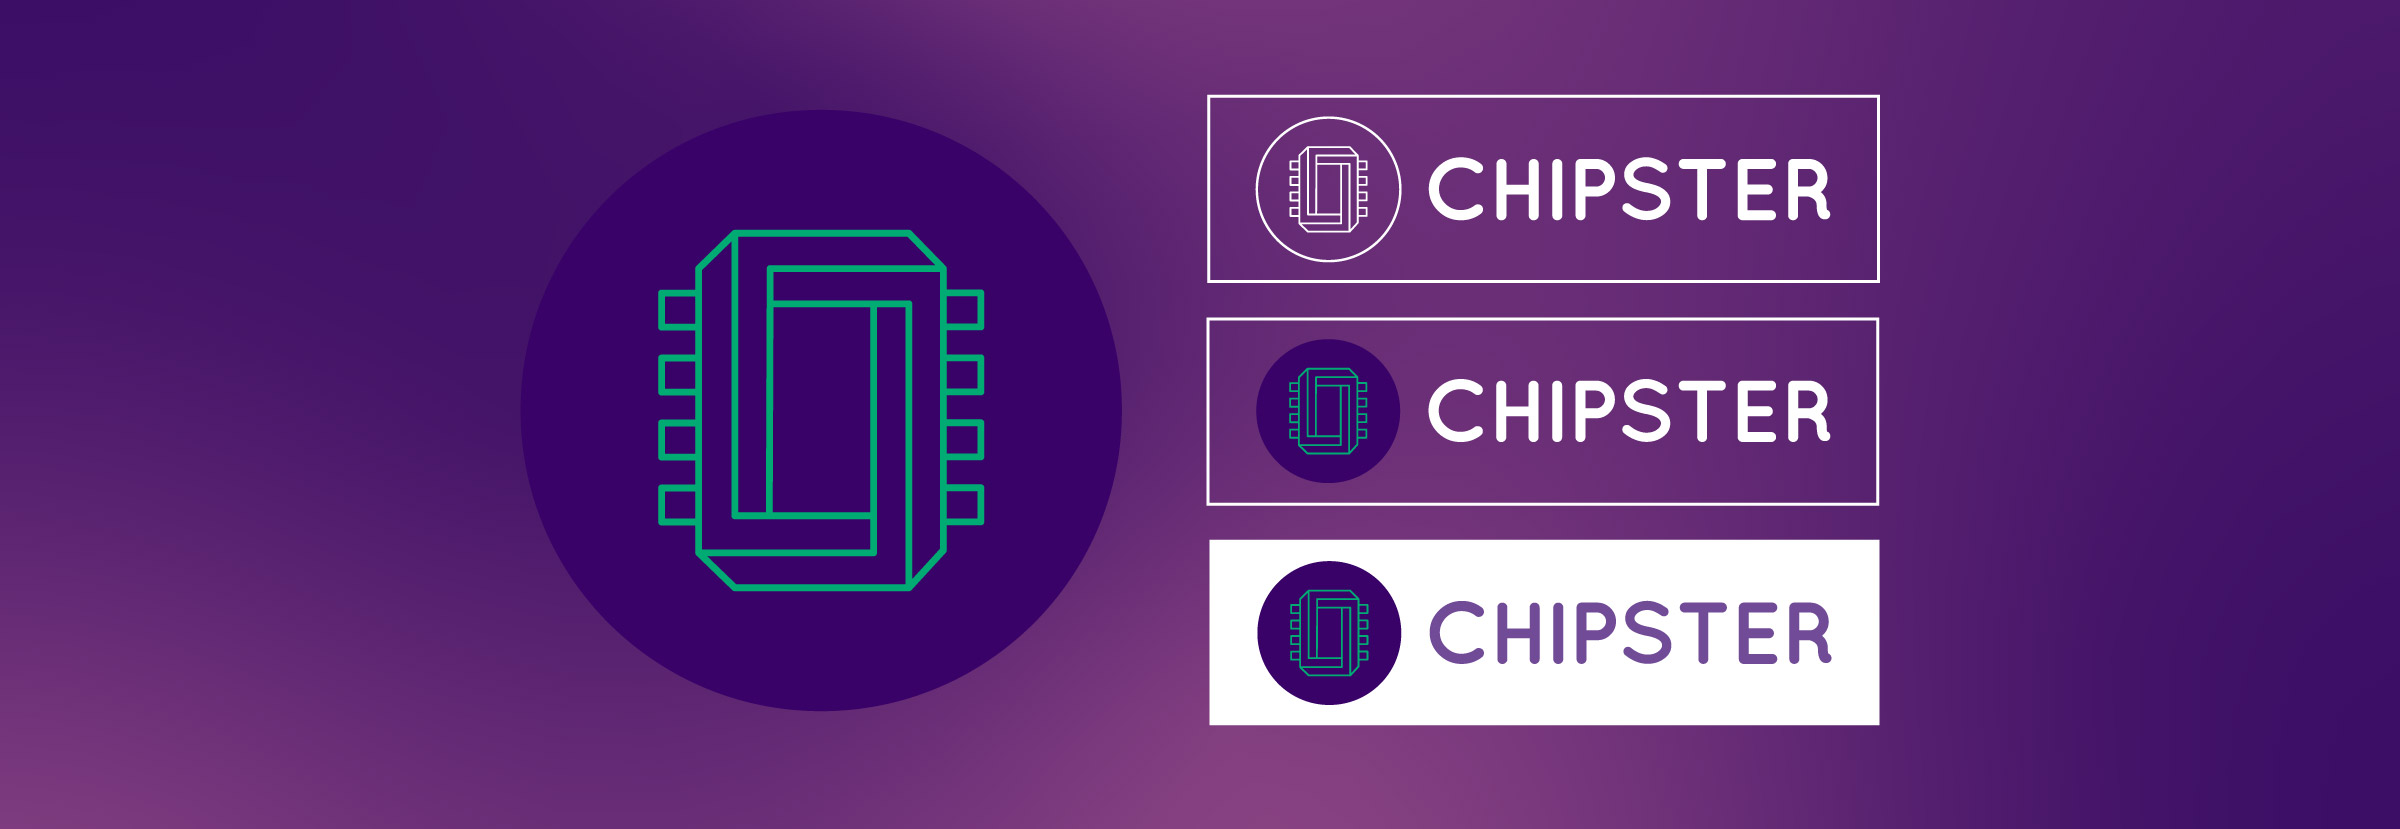 chipster-logos-fullscreen